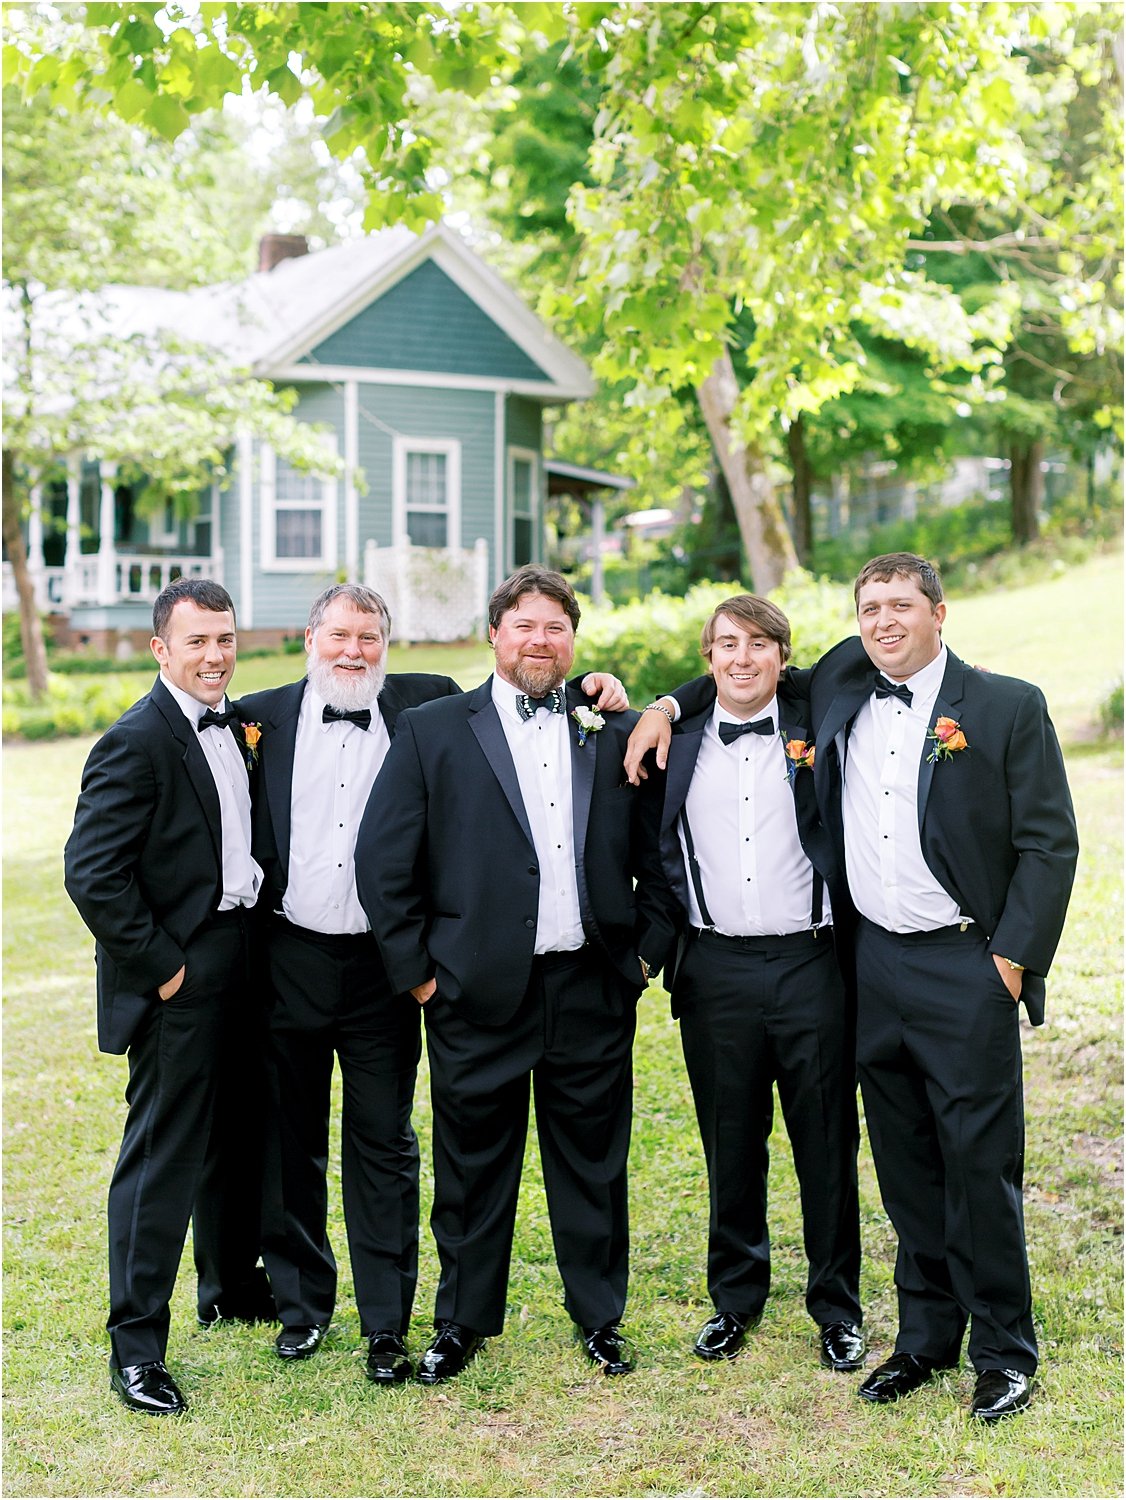 Southern charm groom and groomsmen photoshoot